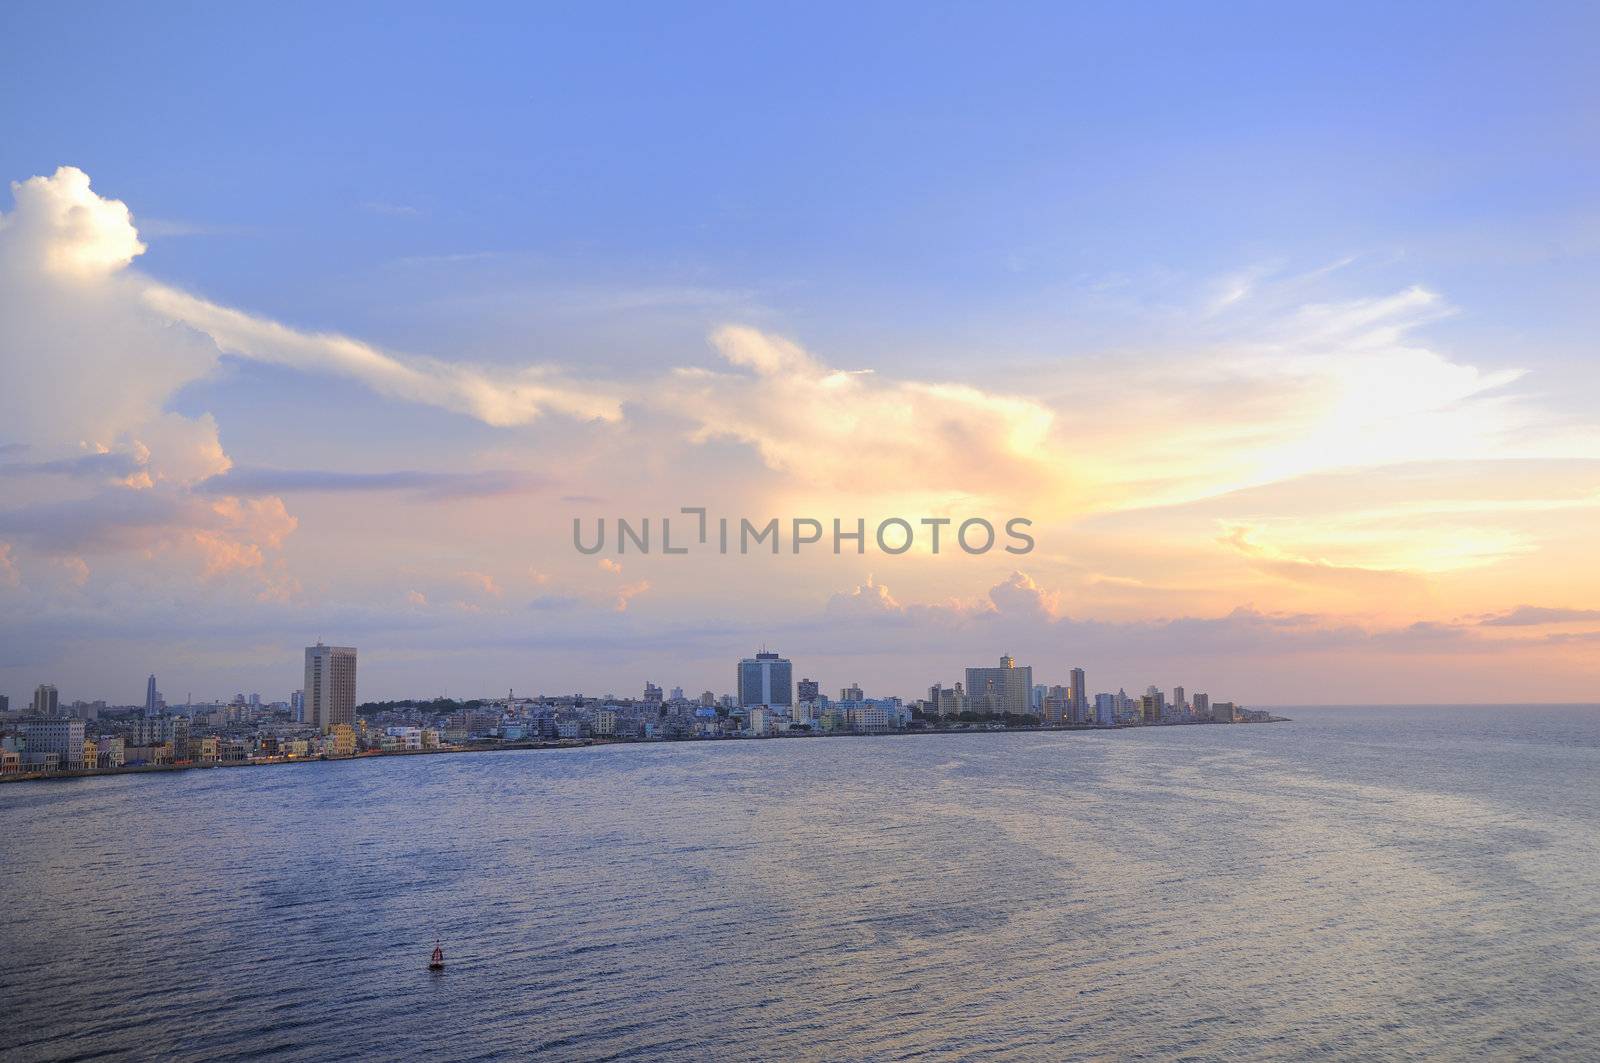 Havana bay entrance and city skyline at sunset time